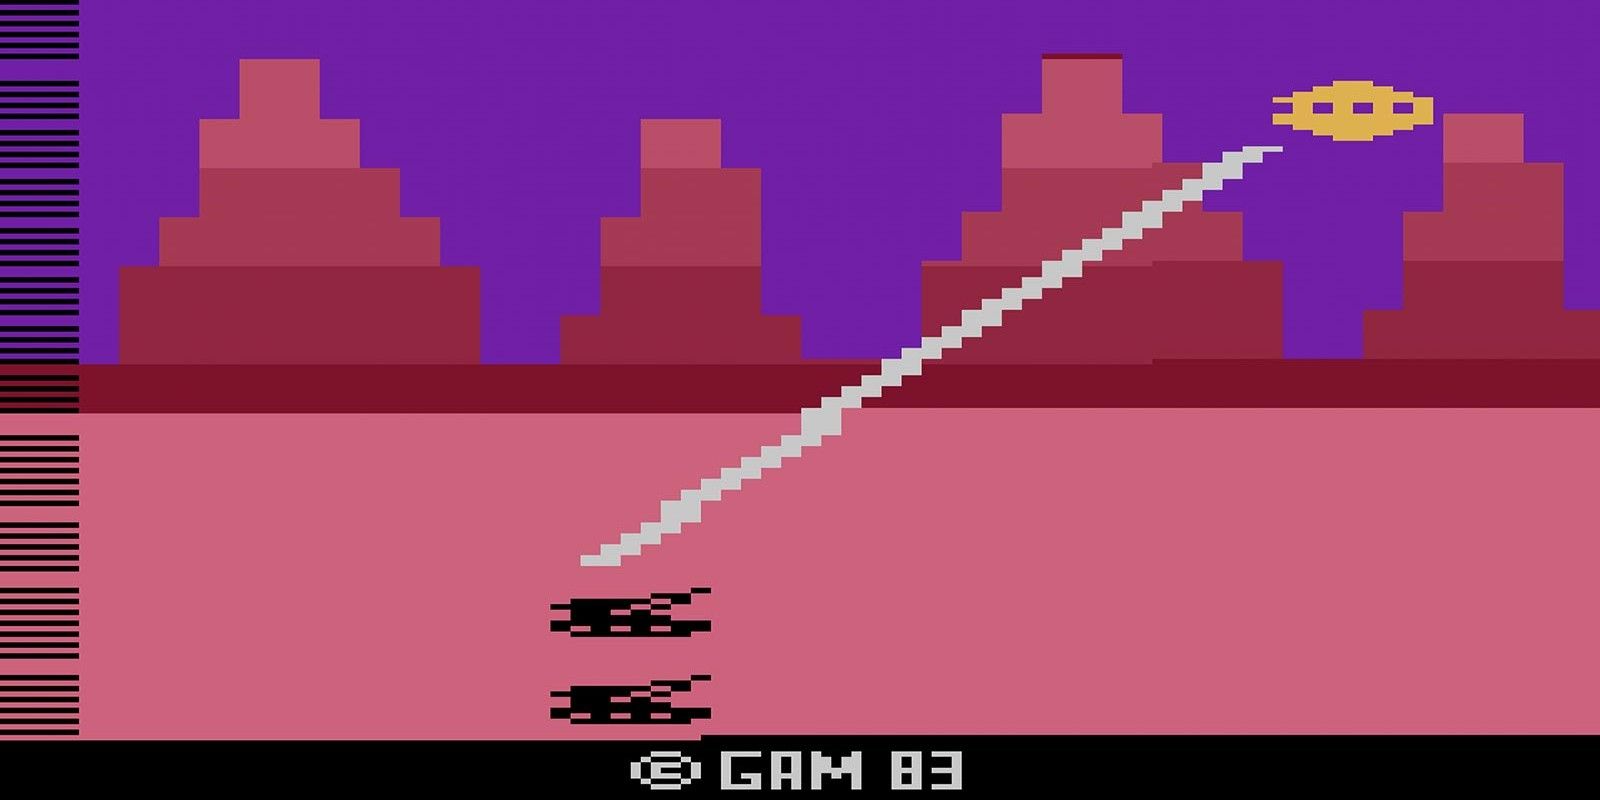 A screenshot from the rare game Gamma Attack